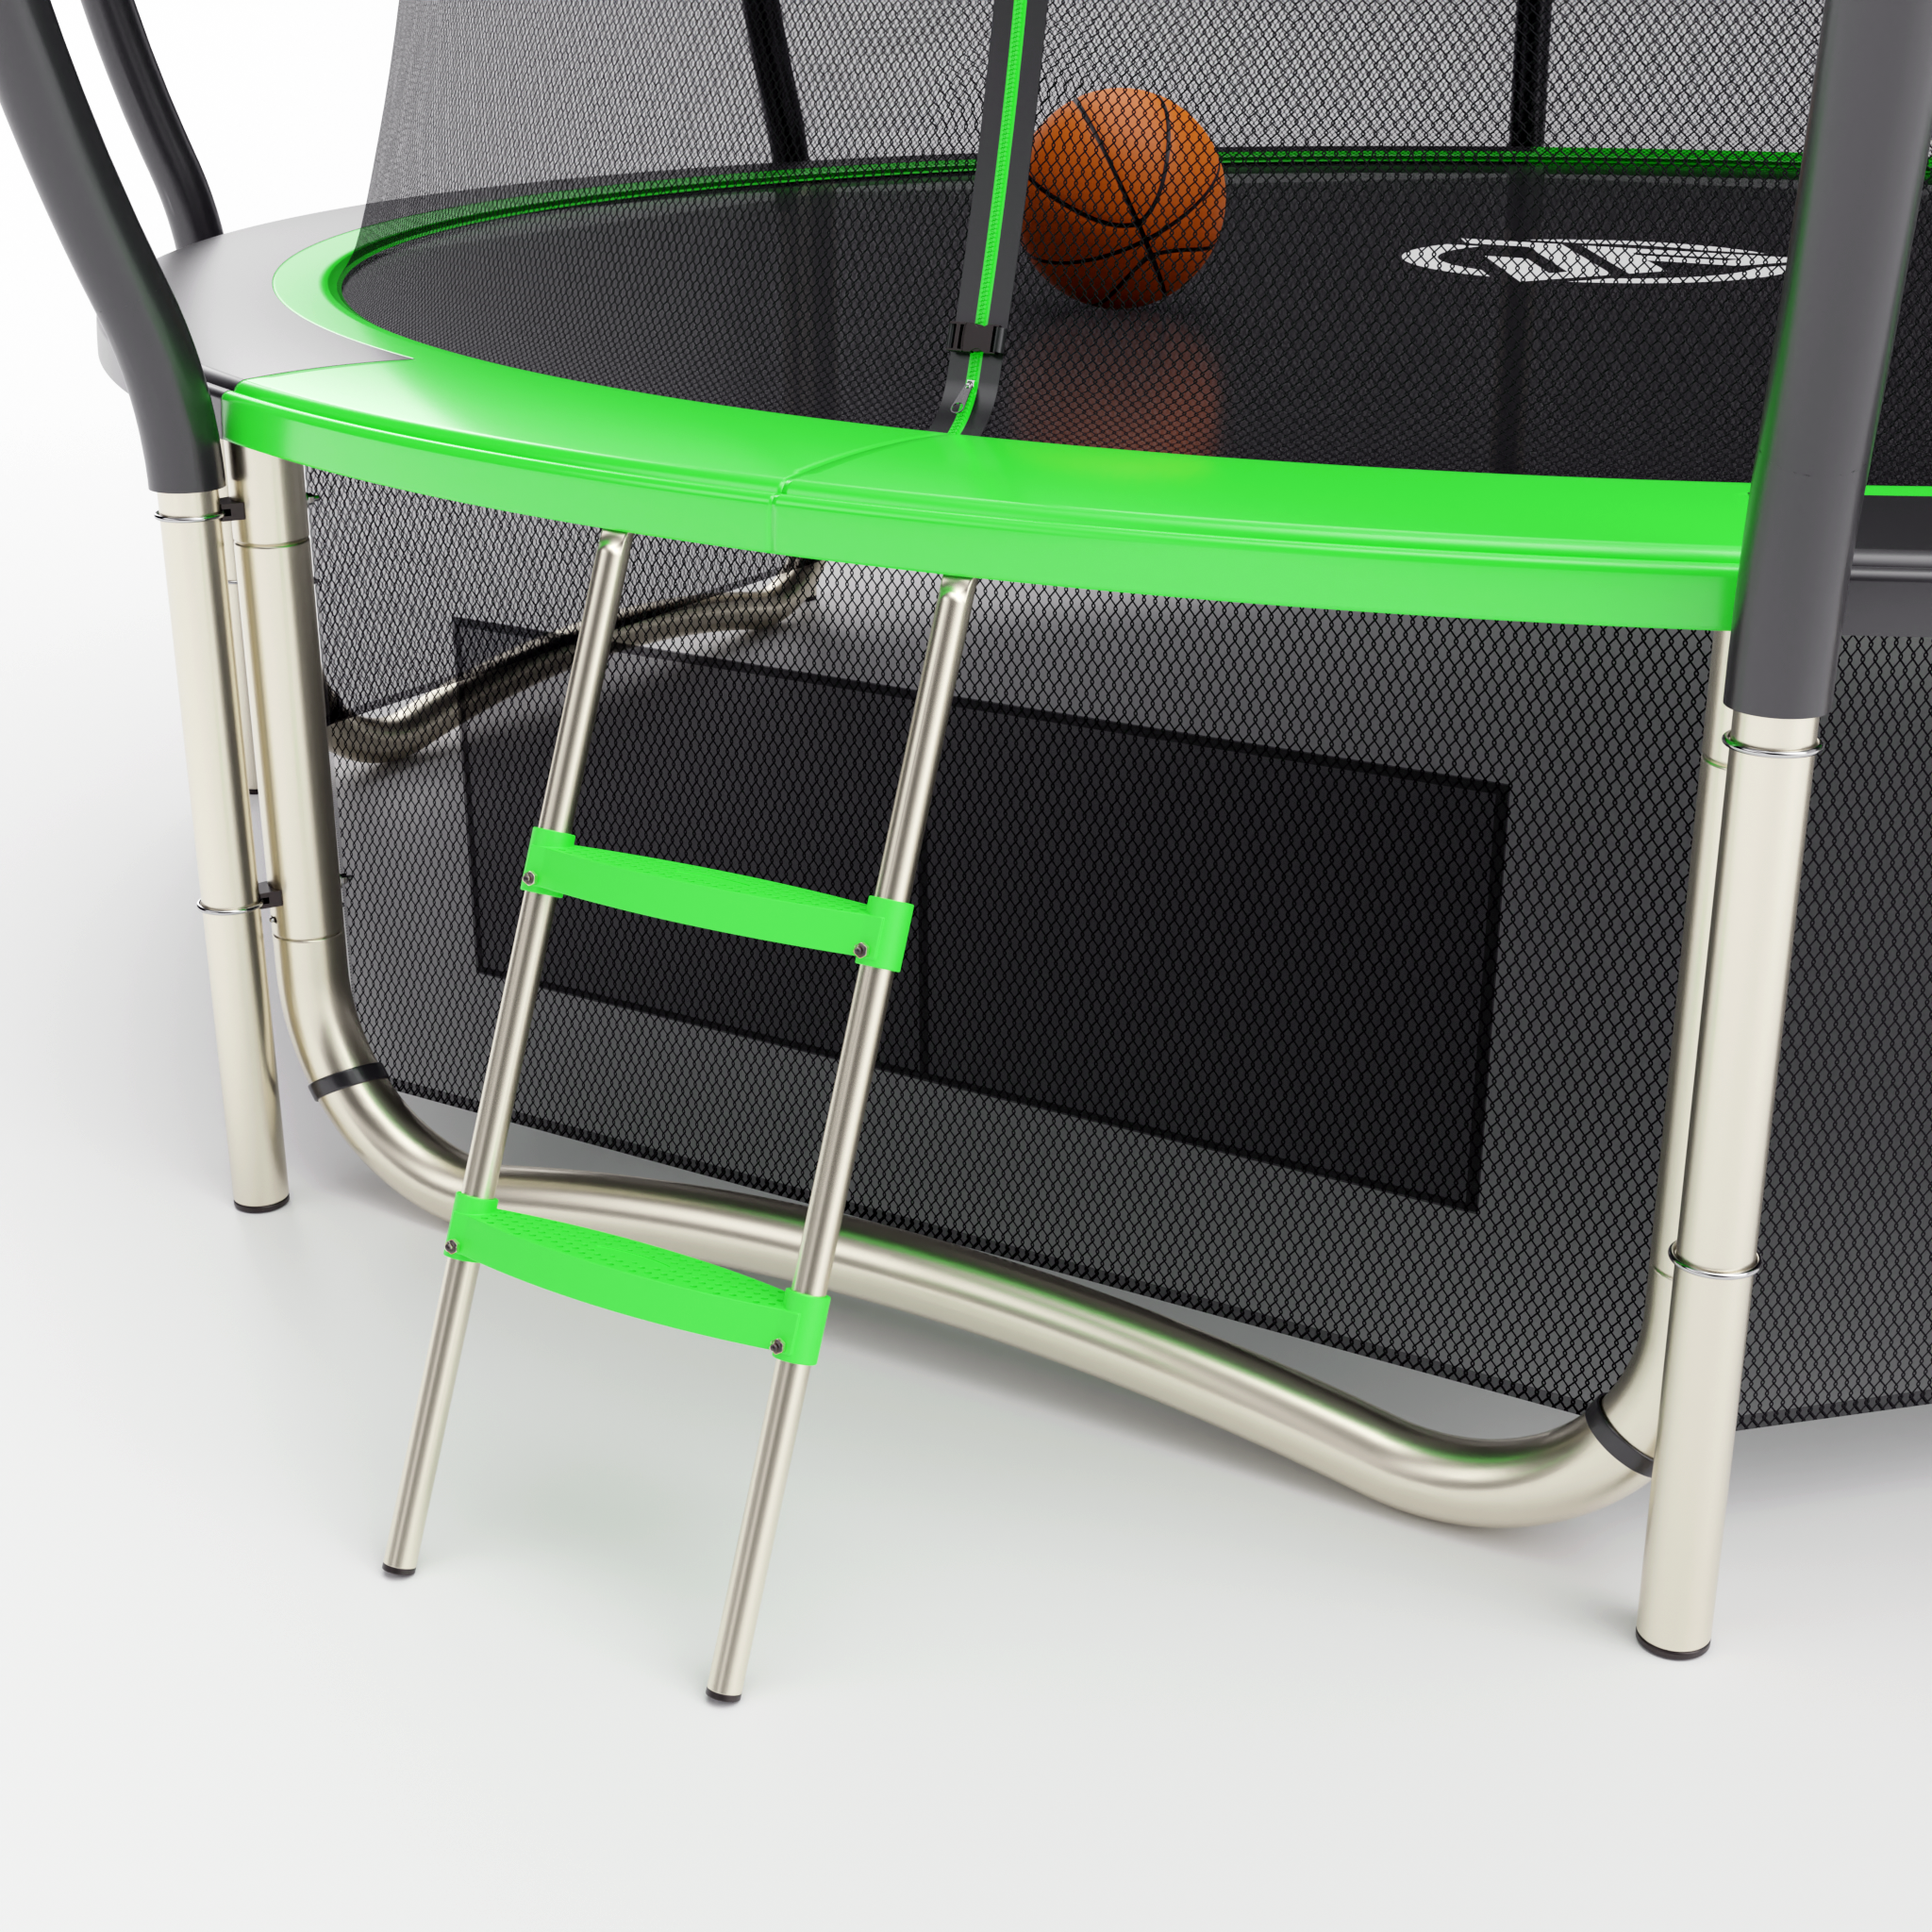 Фото 6 - Батут Jump Power 8 ft Pro Inside Basket Green.